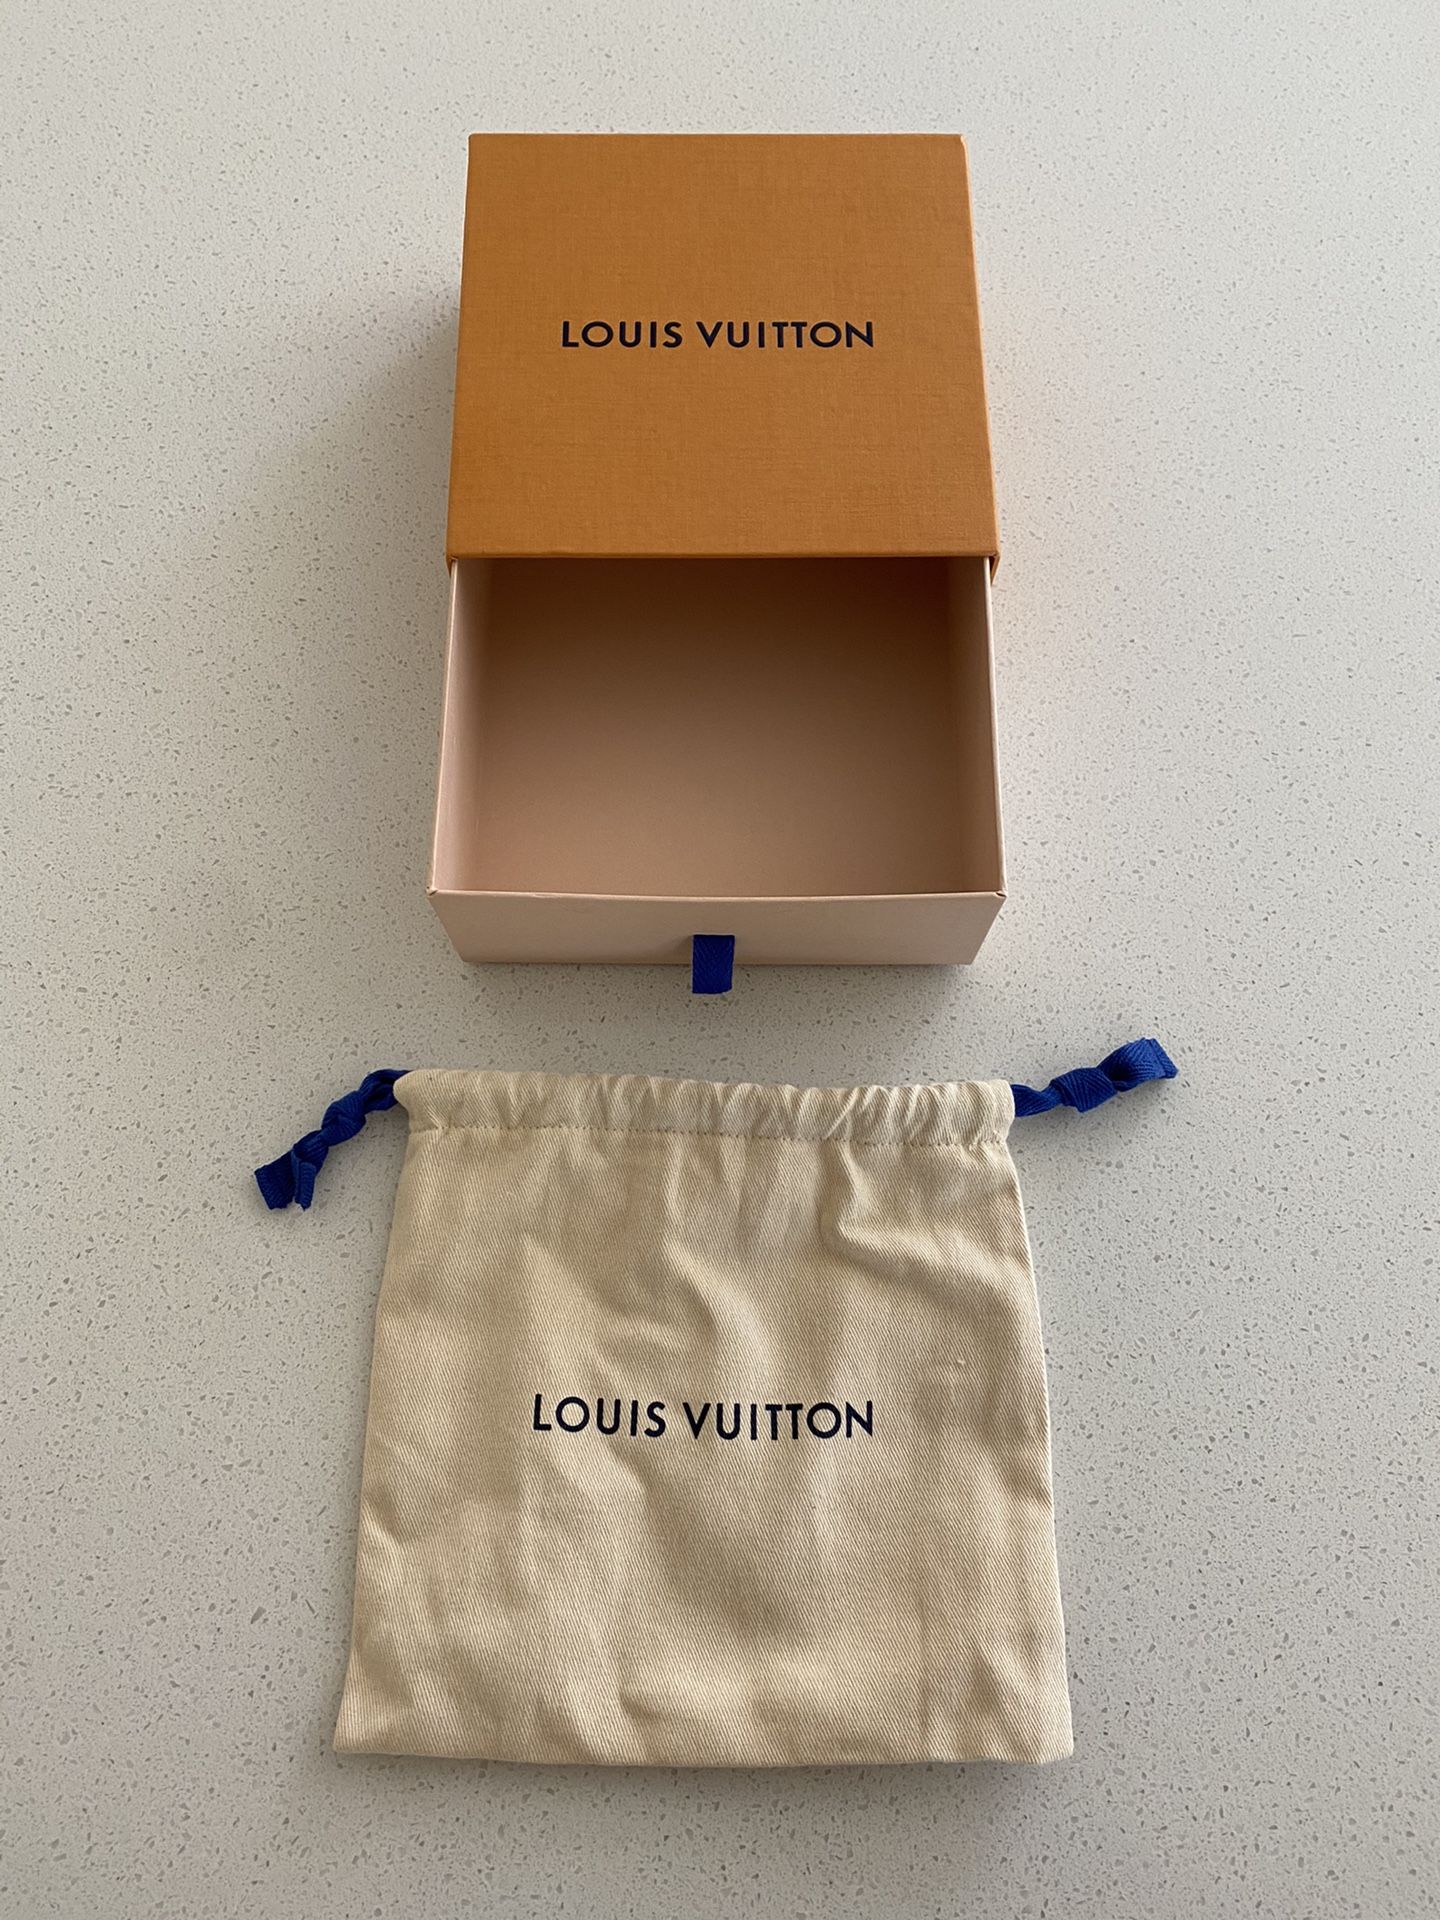 Louis Vuitton Dust Bag and Box Authentic